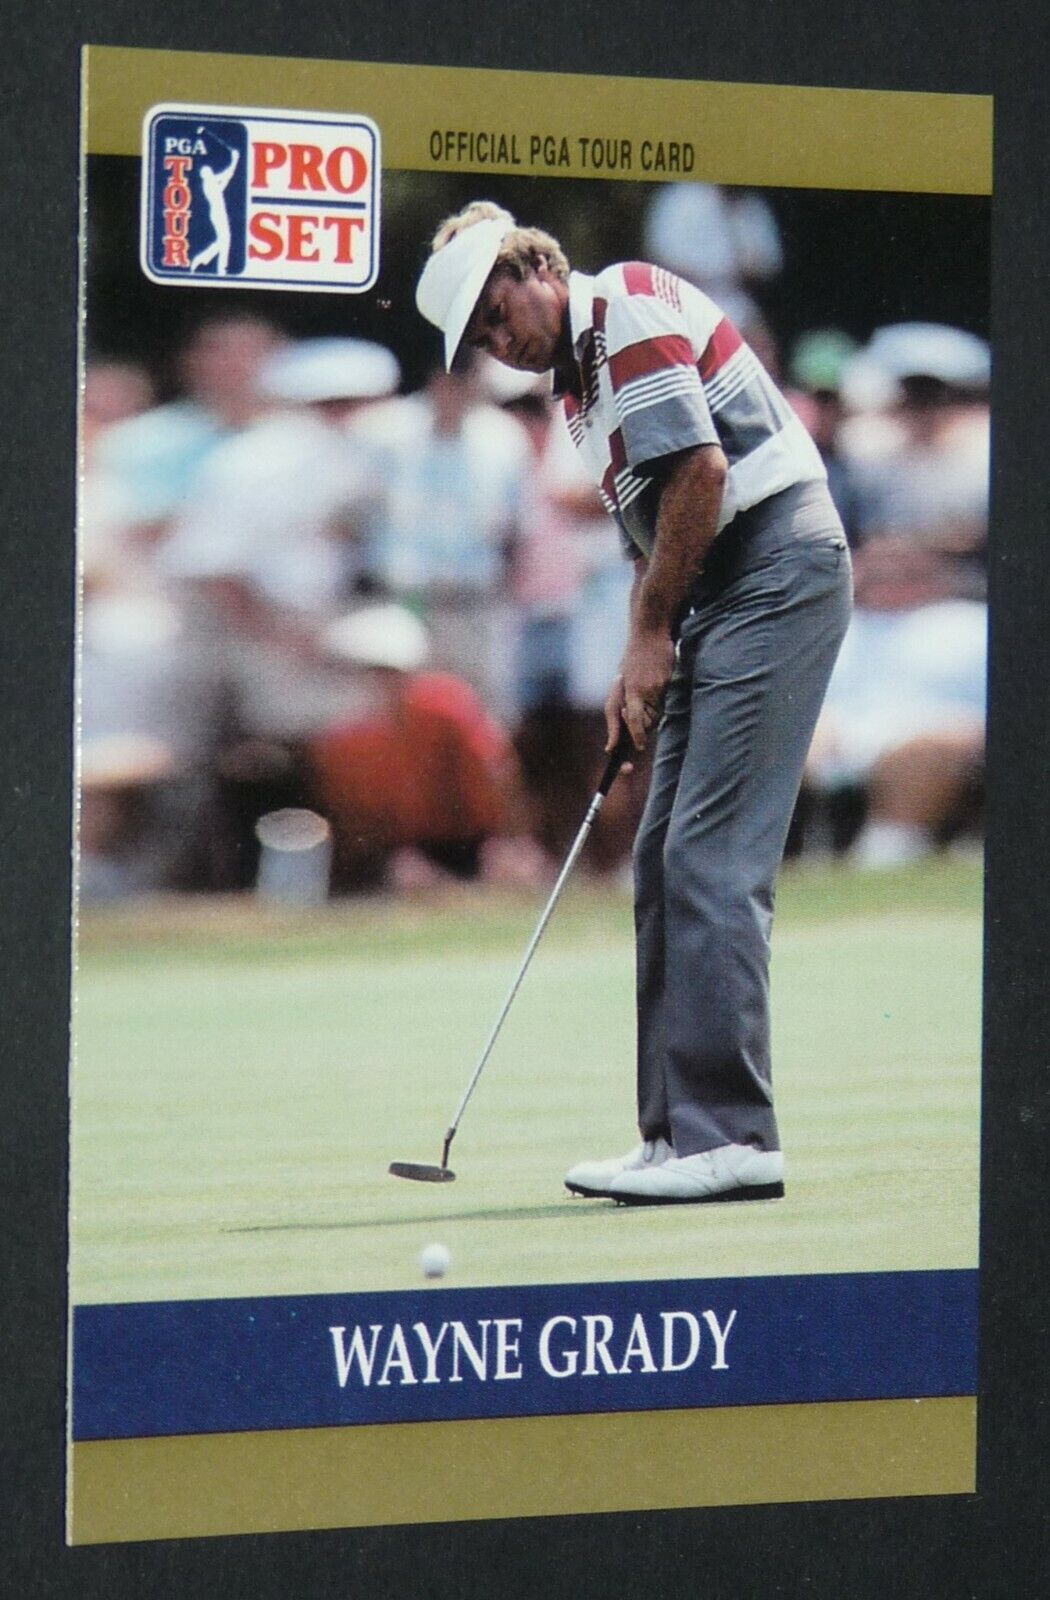 #48 GRADY AUSTRALIA USA PRO SET CARD GOLF 1990 PGA TOUR GOLFING GOLFER USPGA